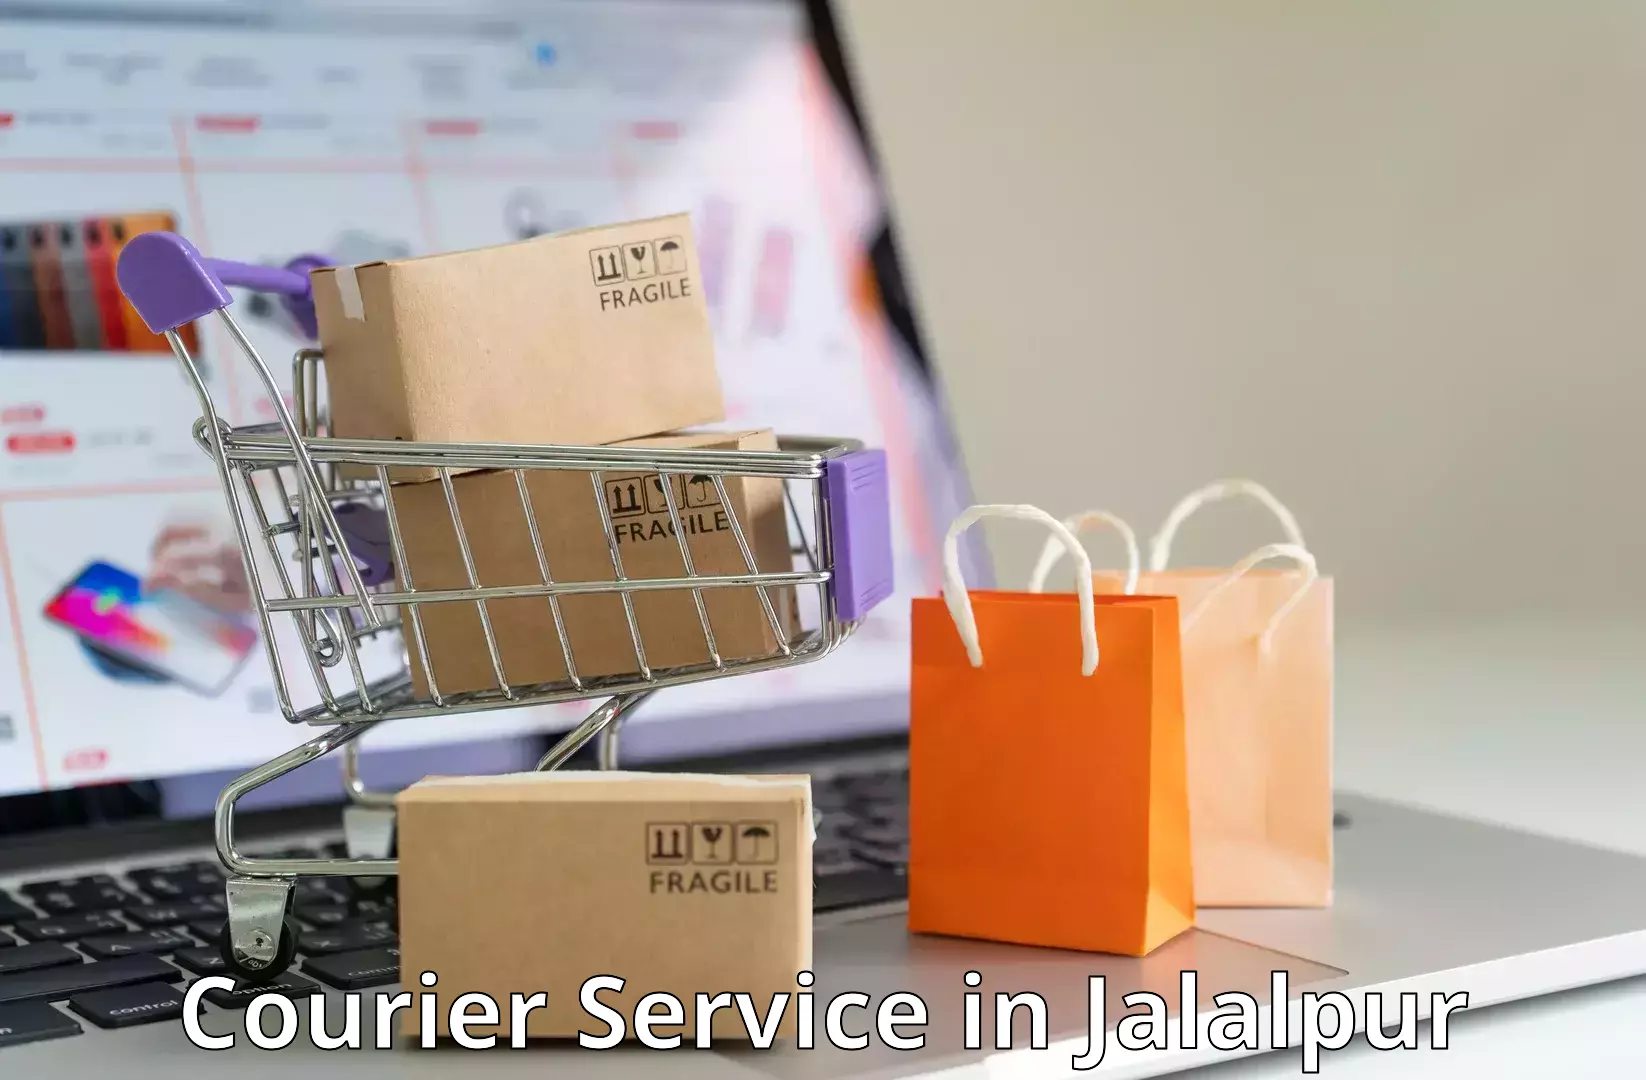 Short distance delivery in Jalalpur